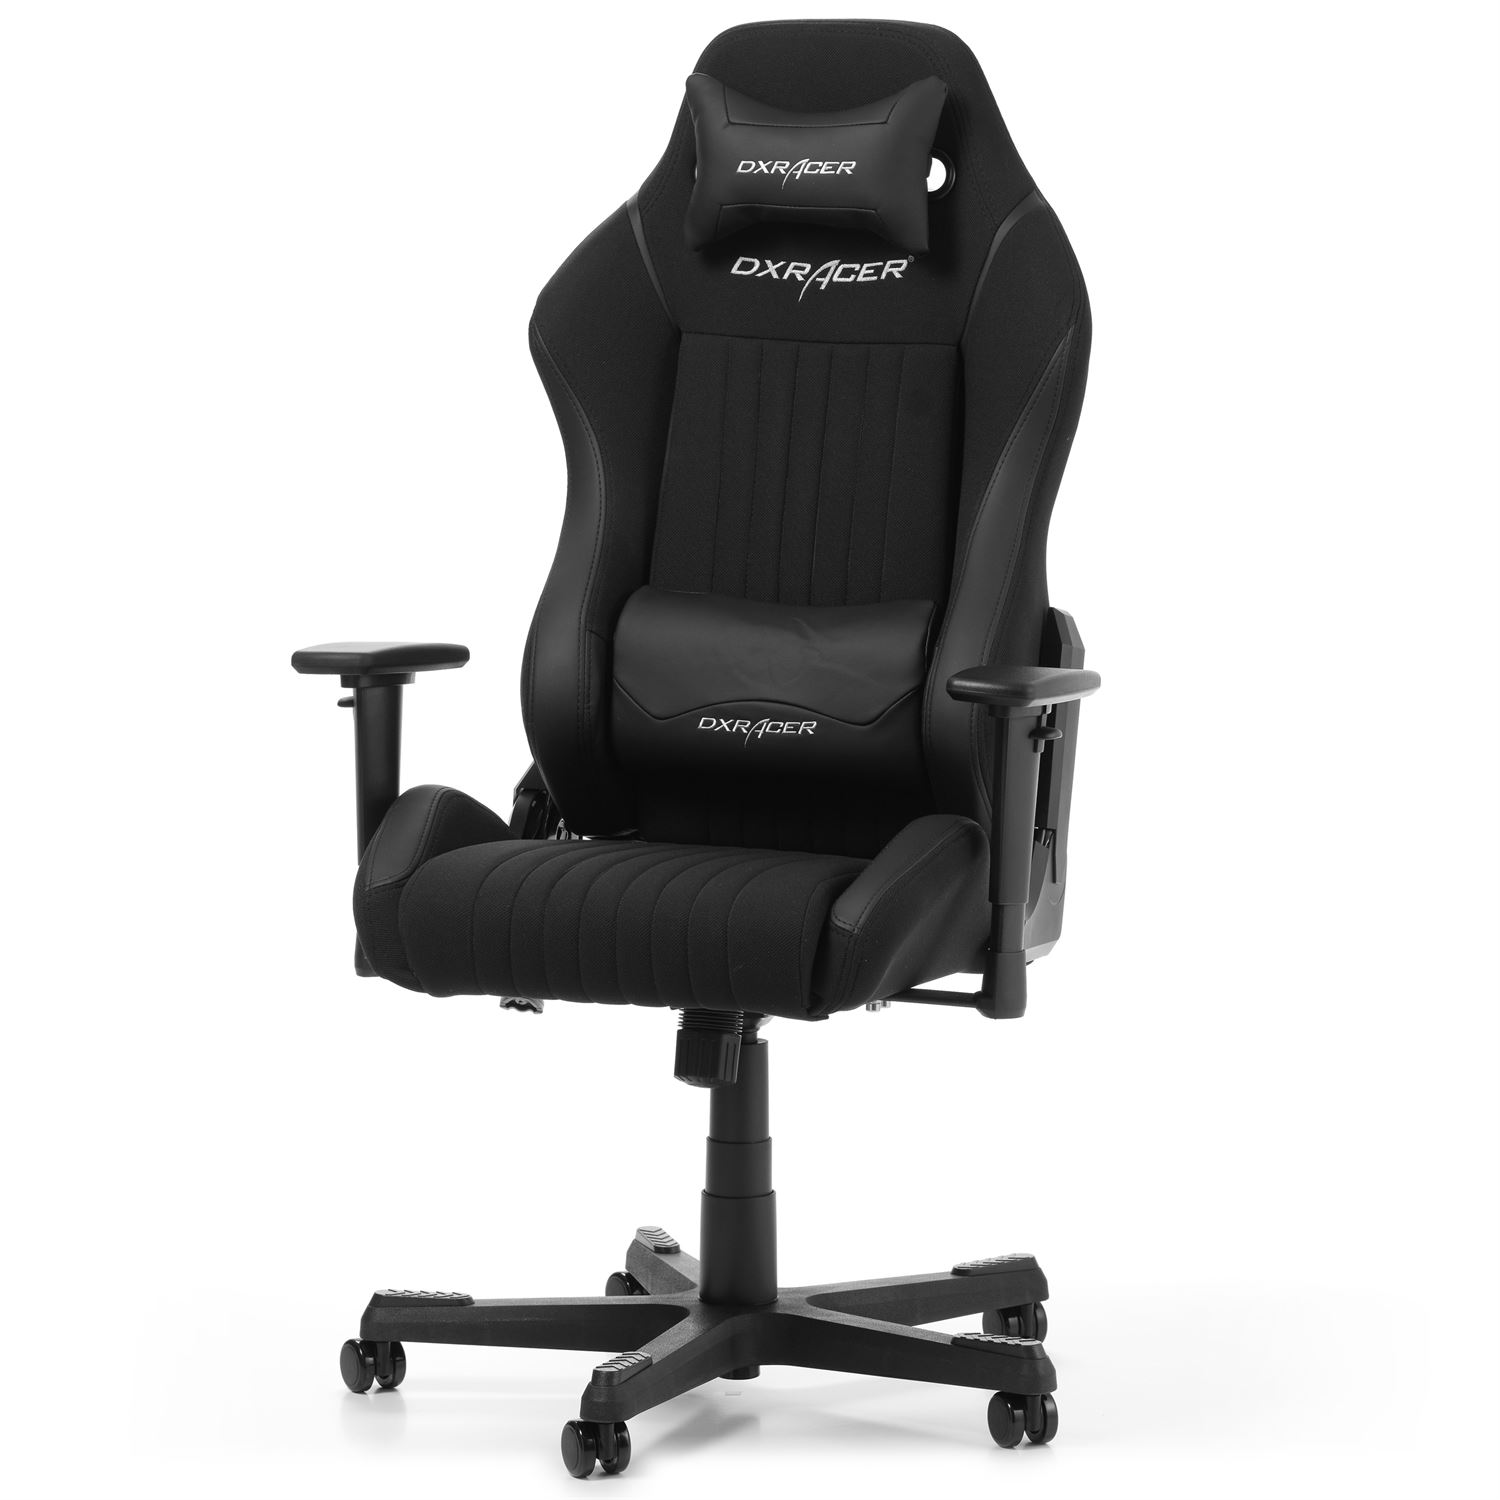  DXRacer  DRIFTING Gaming Chair D02 N K b hos WEBdanes dk